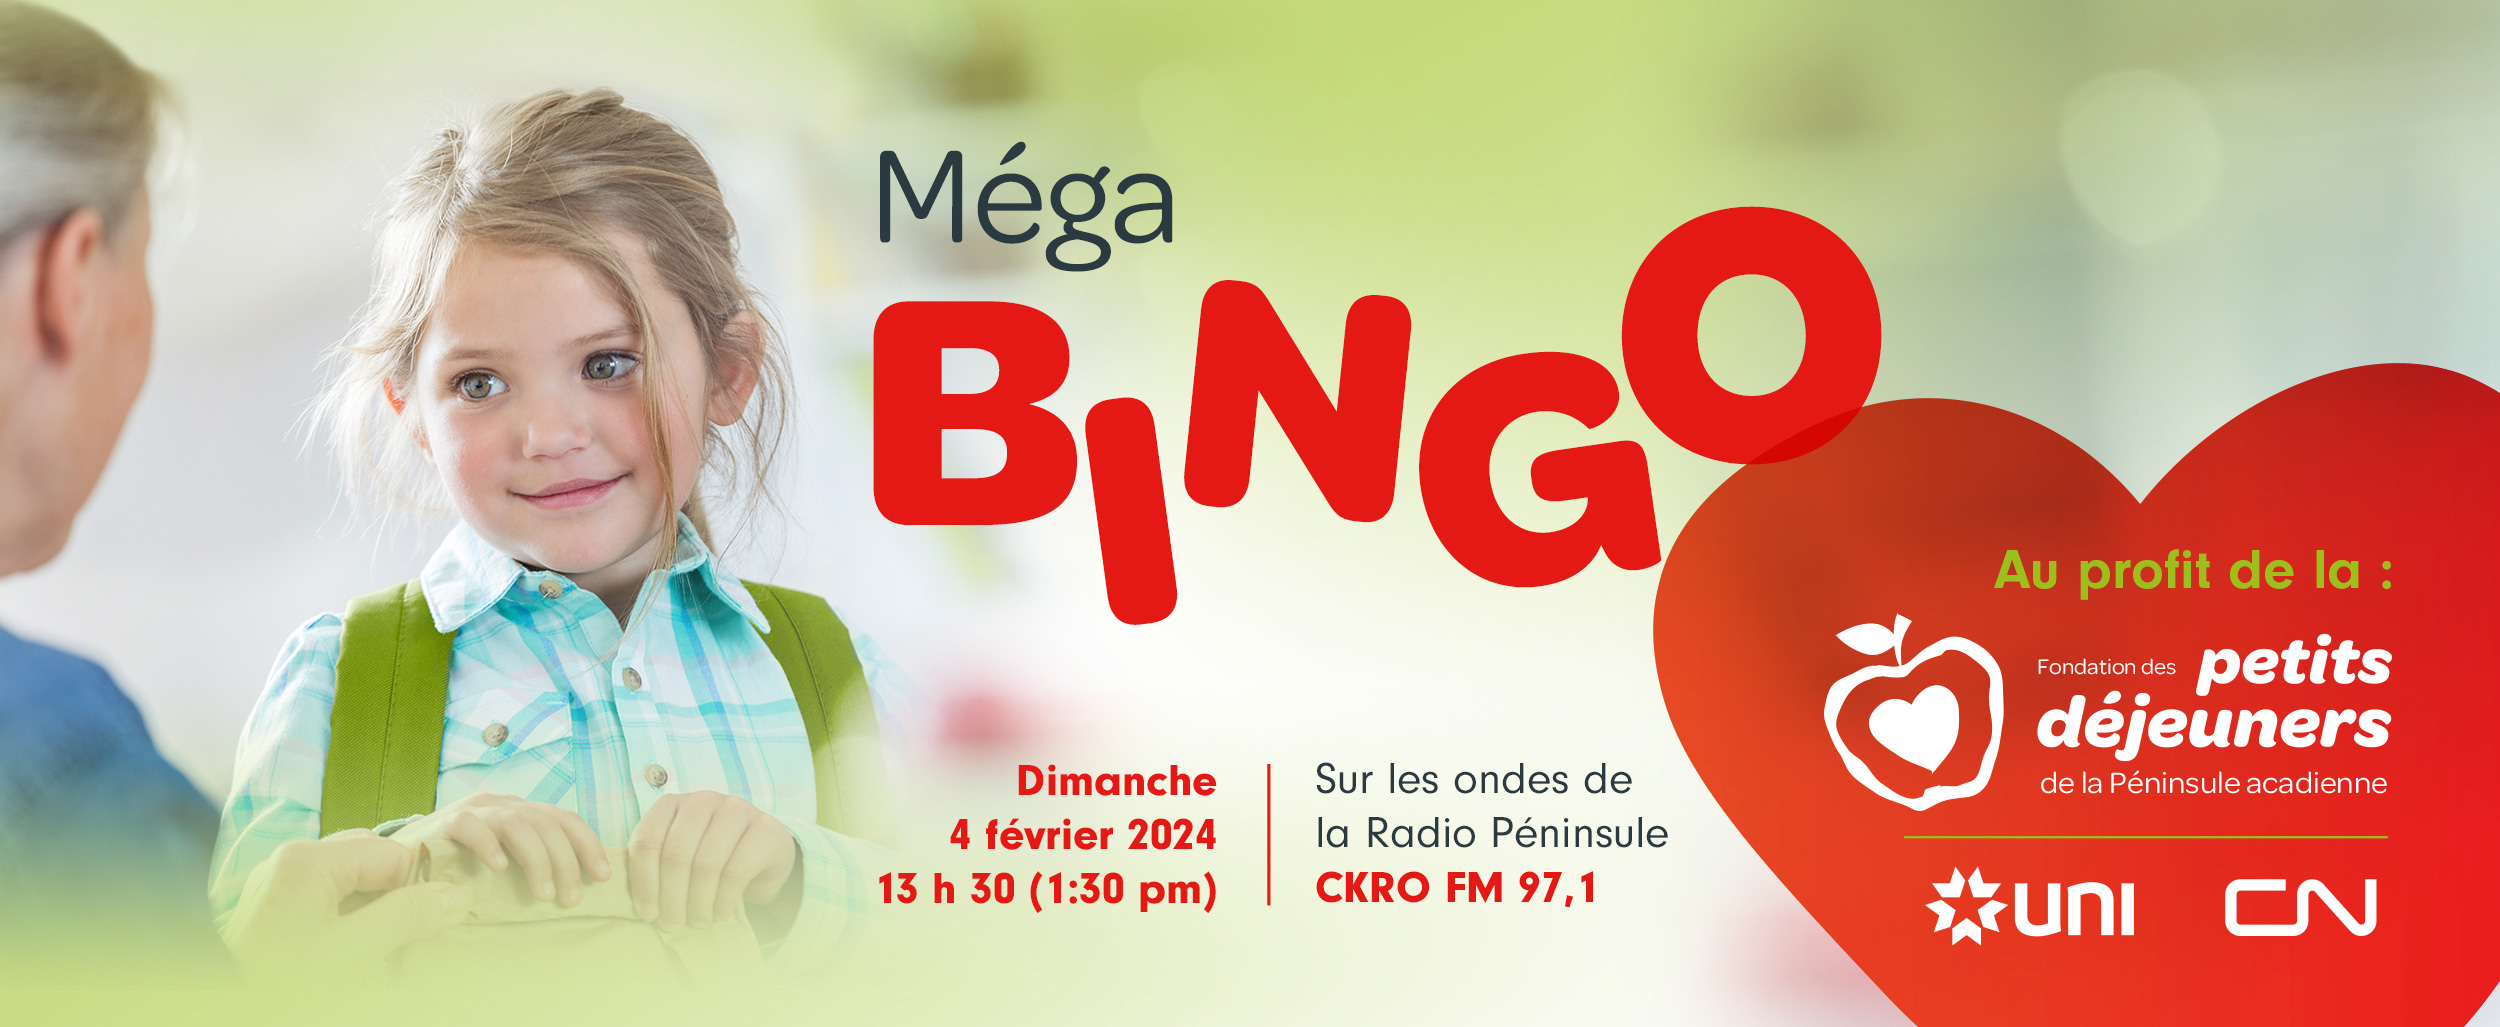 Fondation-des-petits-déjeuners-de-la-PA---Site Web-Bingo-2024